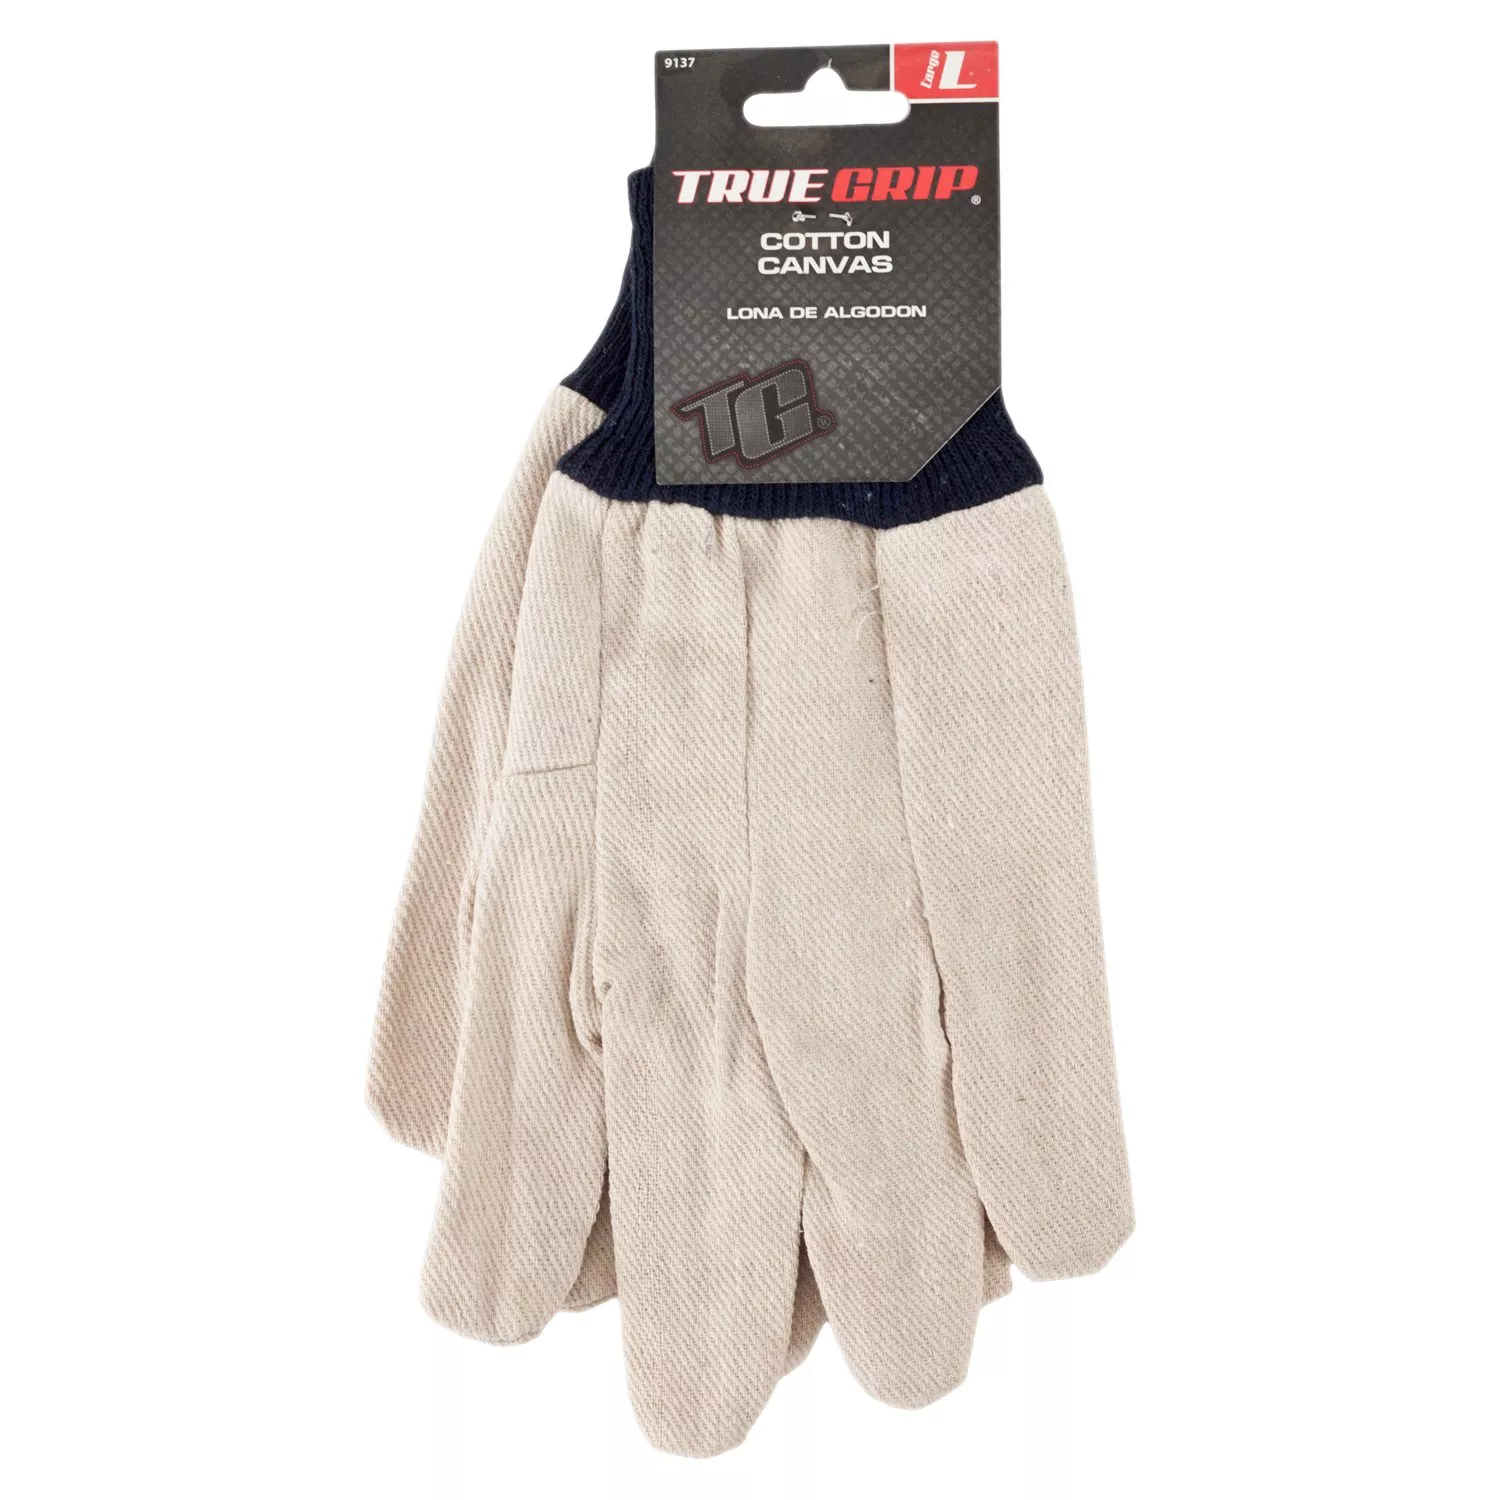 True Grip Cotton Canvas Gloves Large